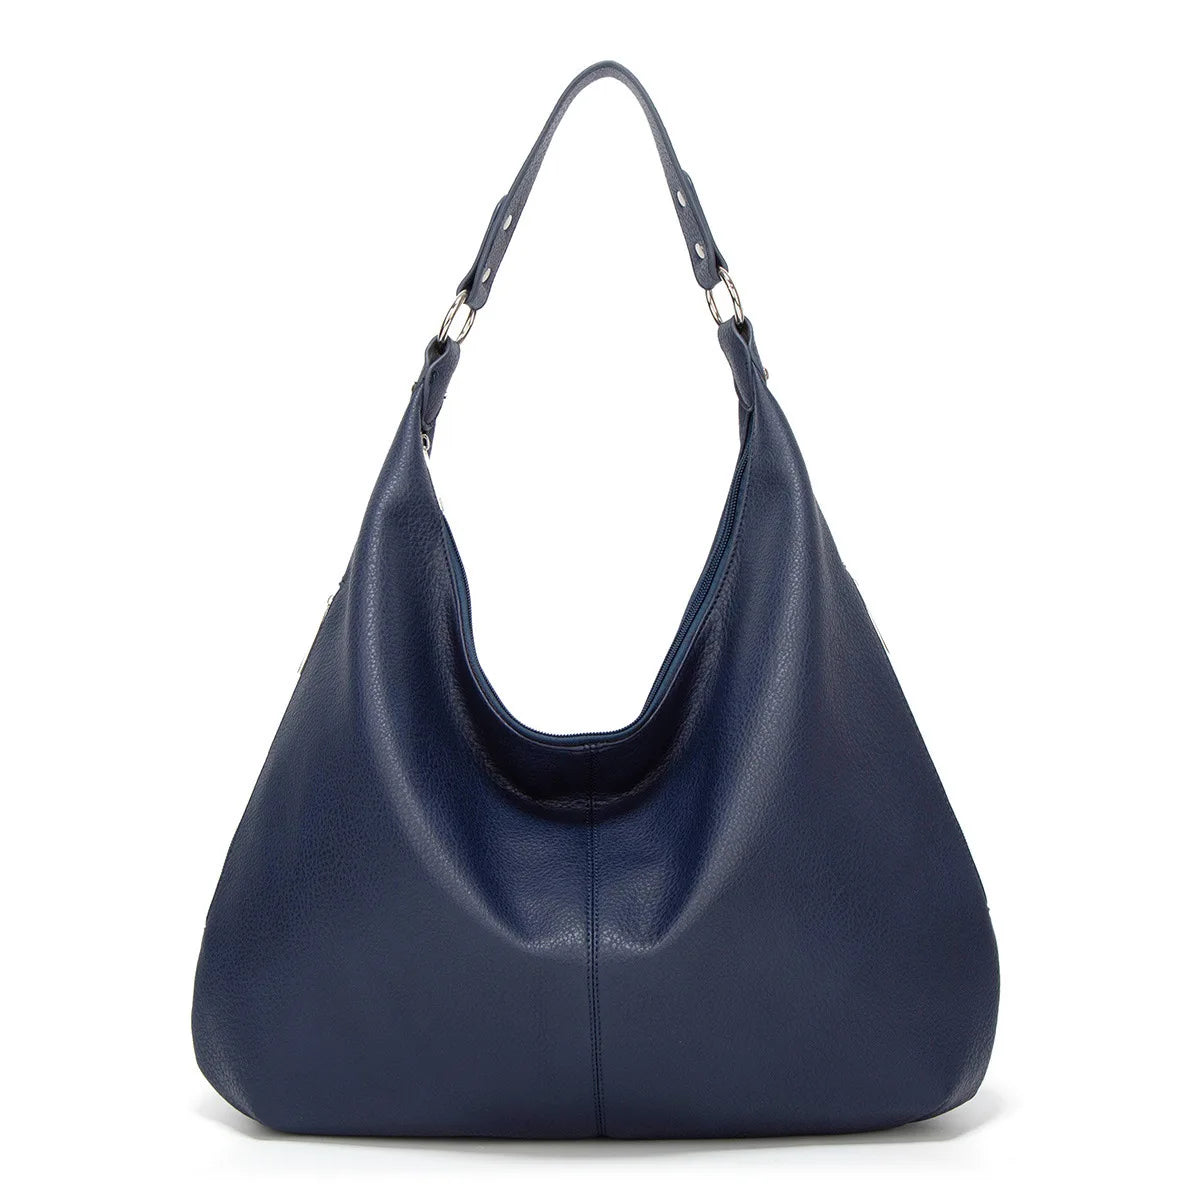 Black Leather Hobo Shoulder Bag The Store Bags A Dark Blue 